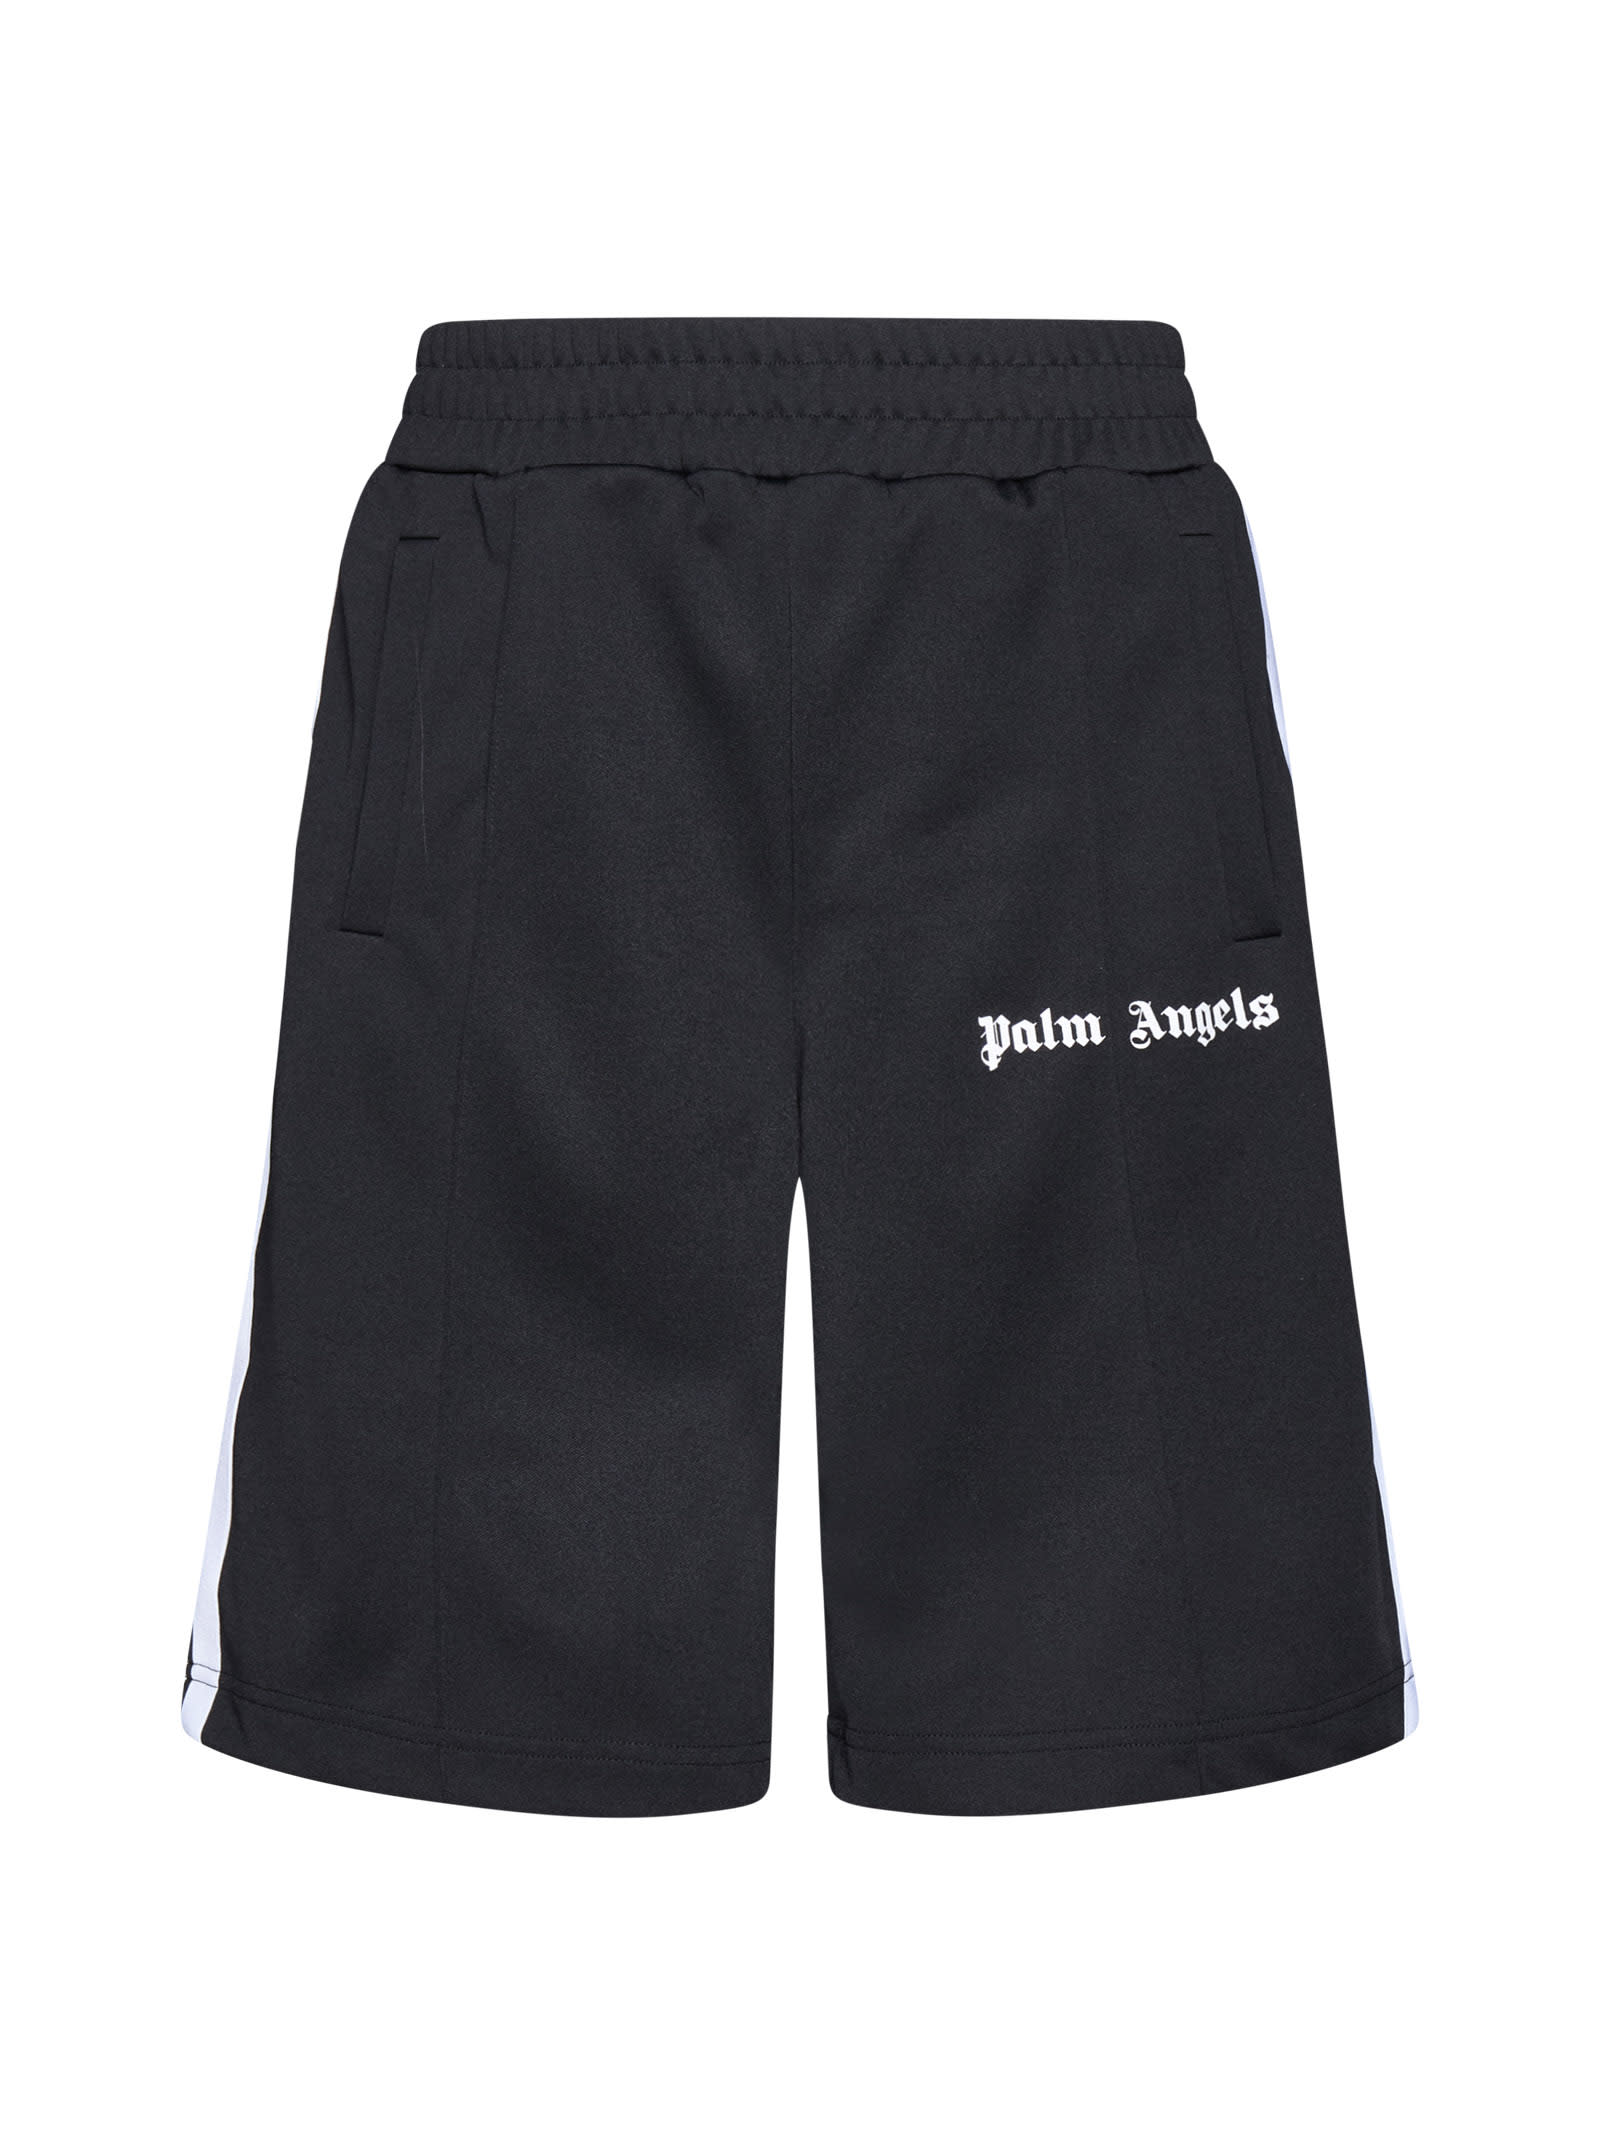 Palm Angels Shorts